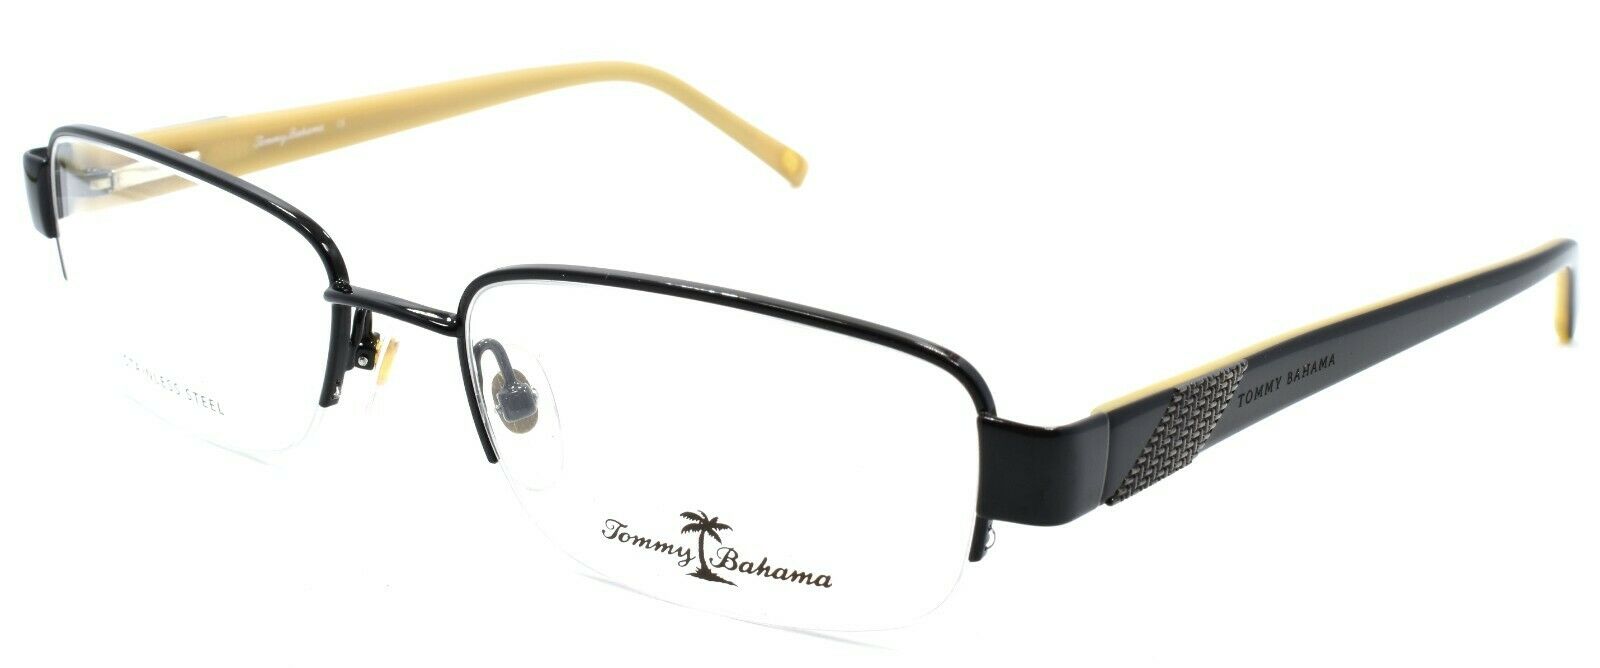 1-Tommy Bahama TB4011 001 Men's Eyeglasses Frames Half-rim 54-18-145 Black-788678016607-IKSpecs